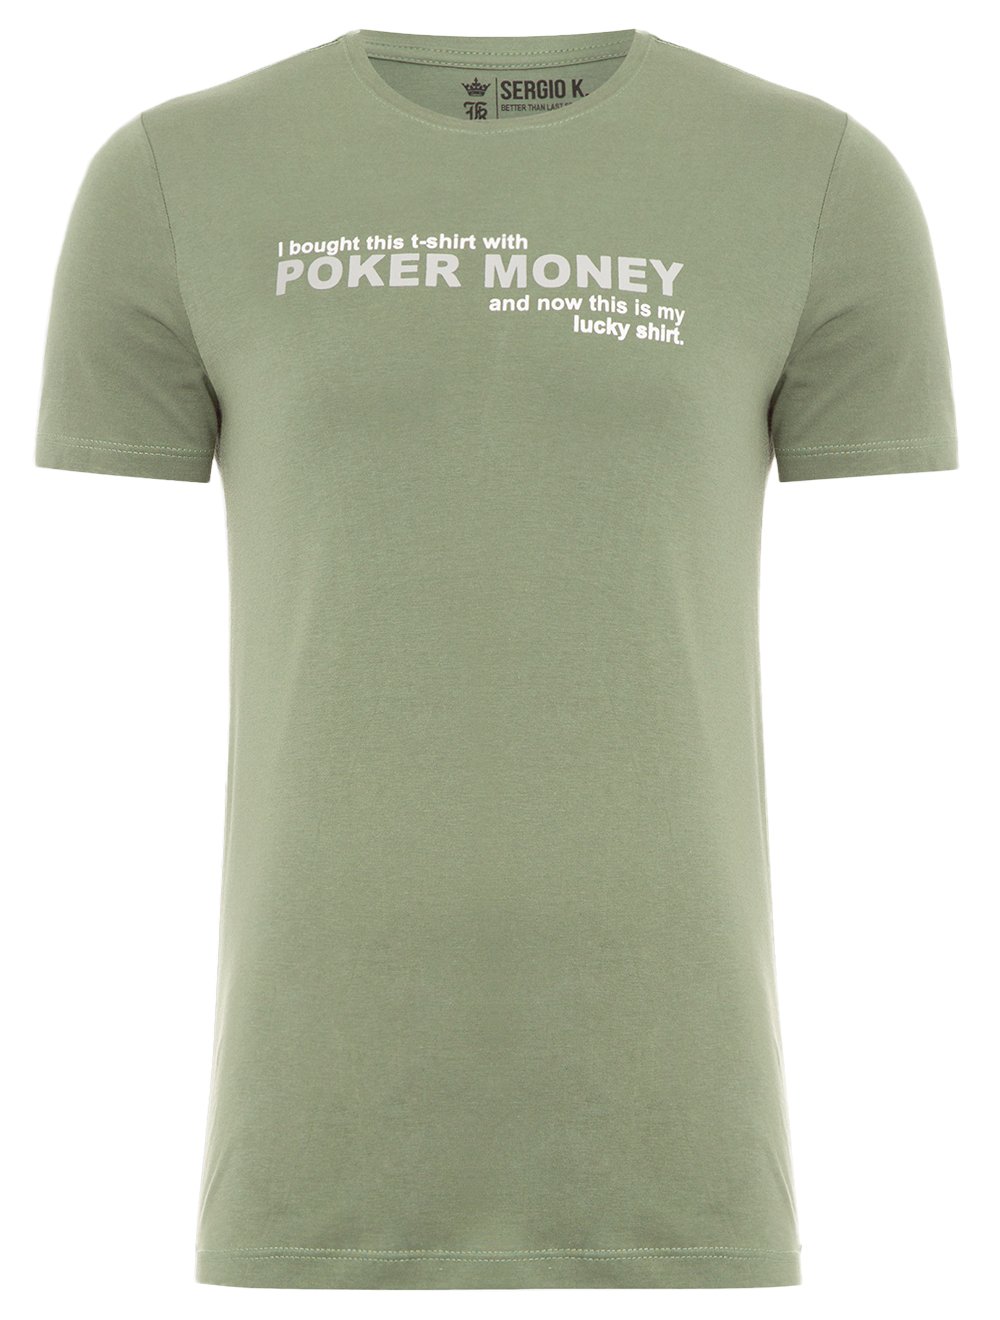 Camiseta Sergio K Masculina Poker Money Verde